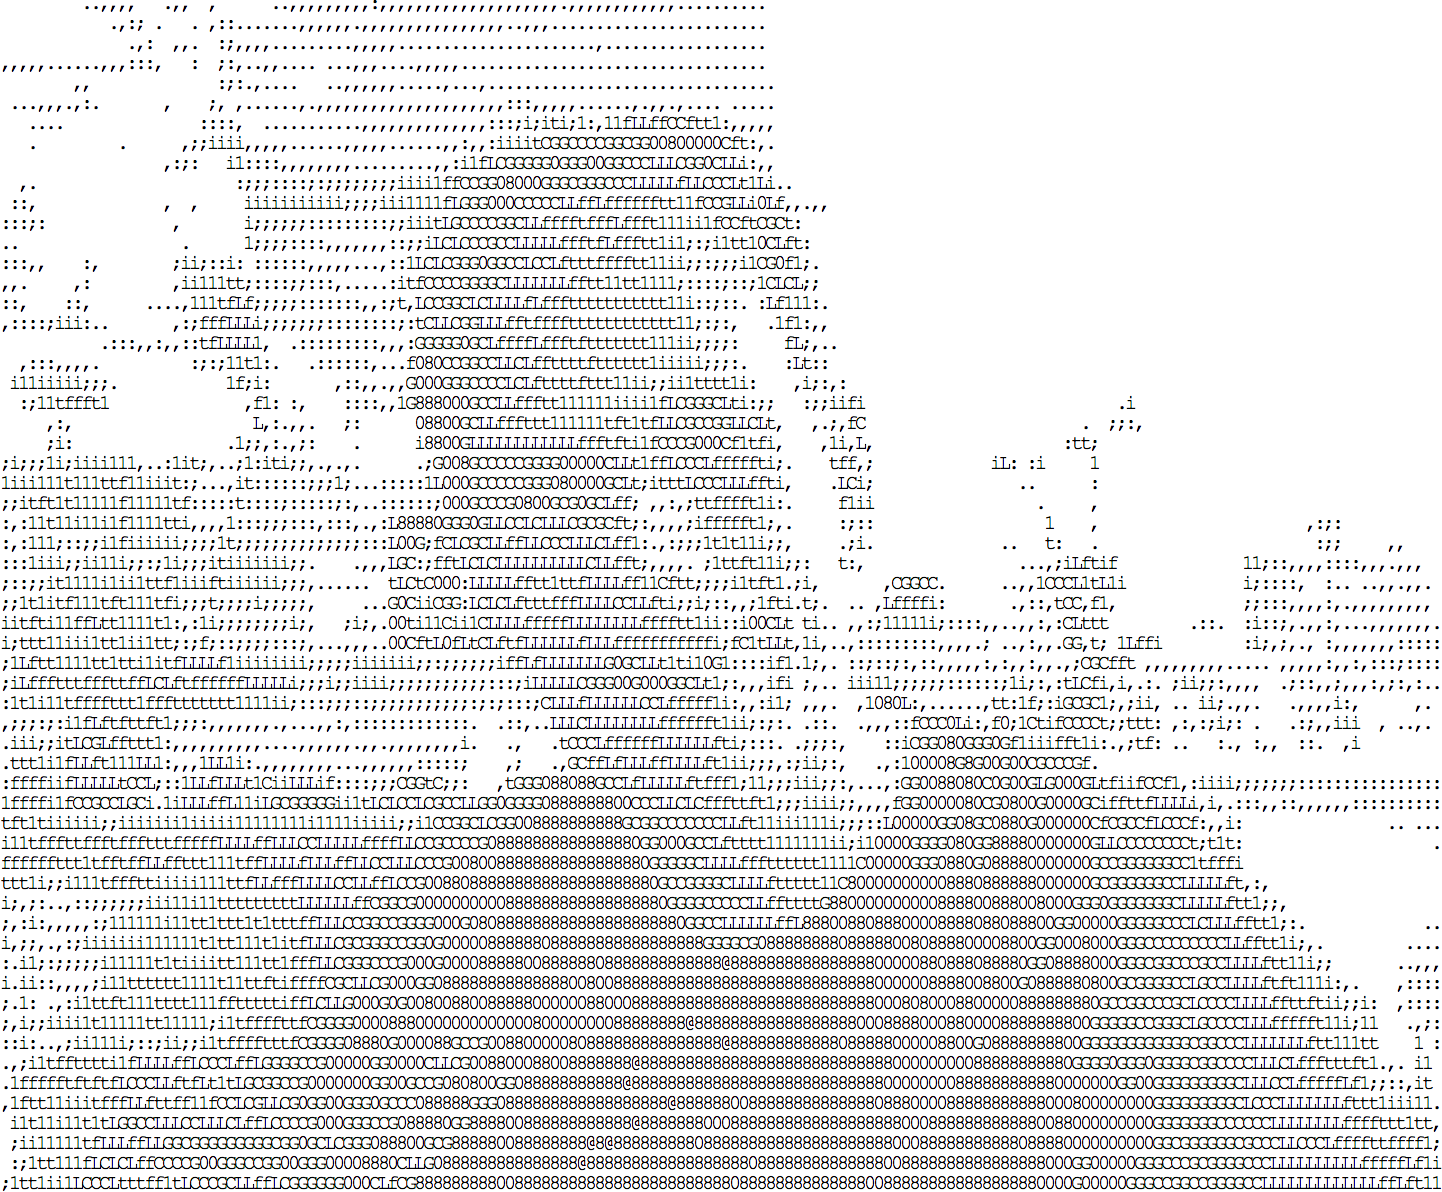 ASCII image generated by idevelop.ro/ascii-camera